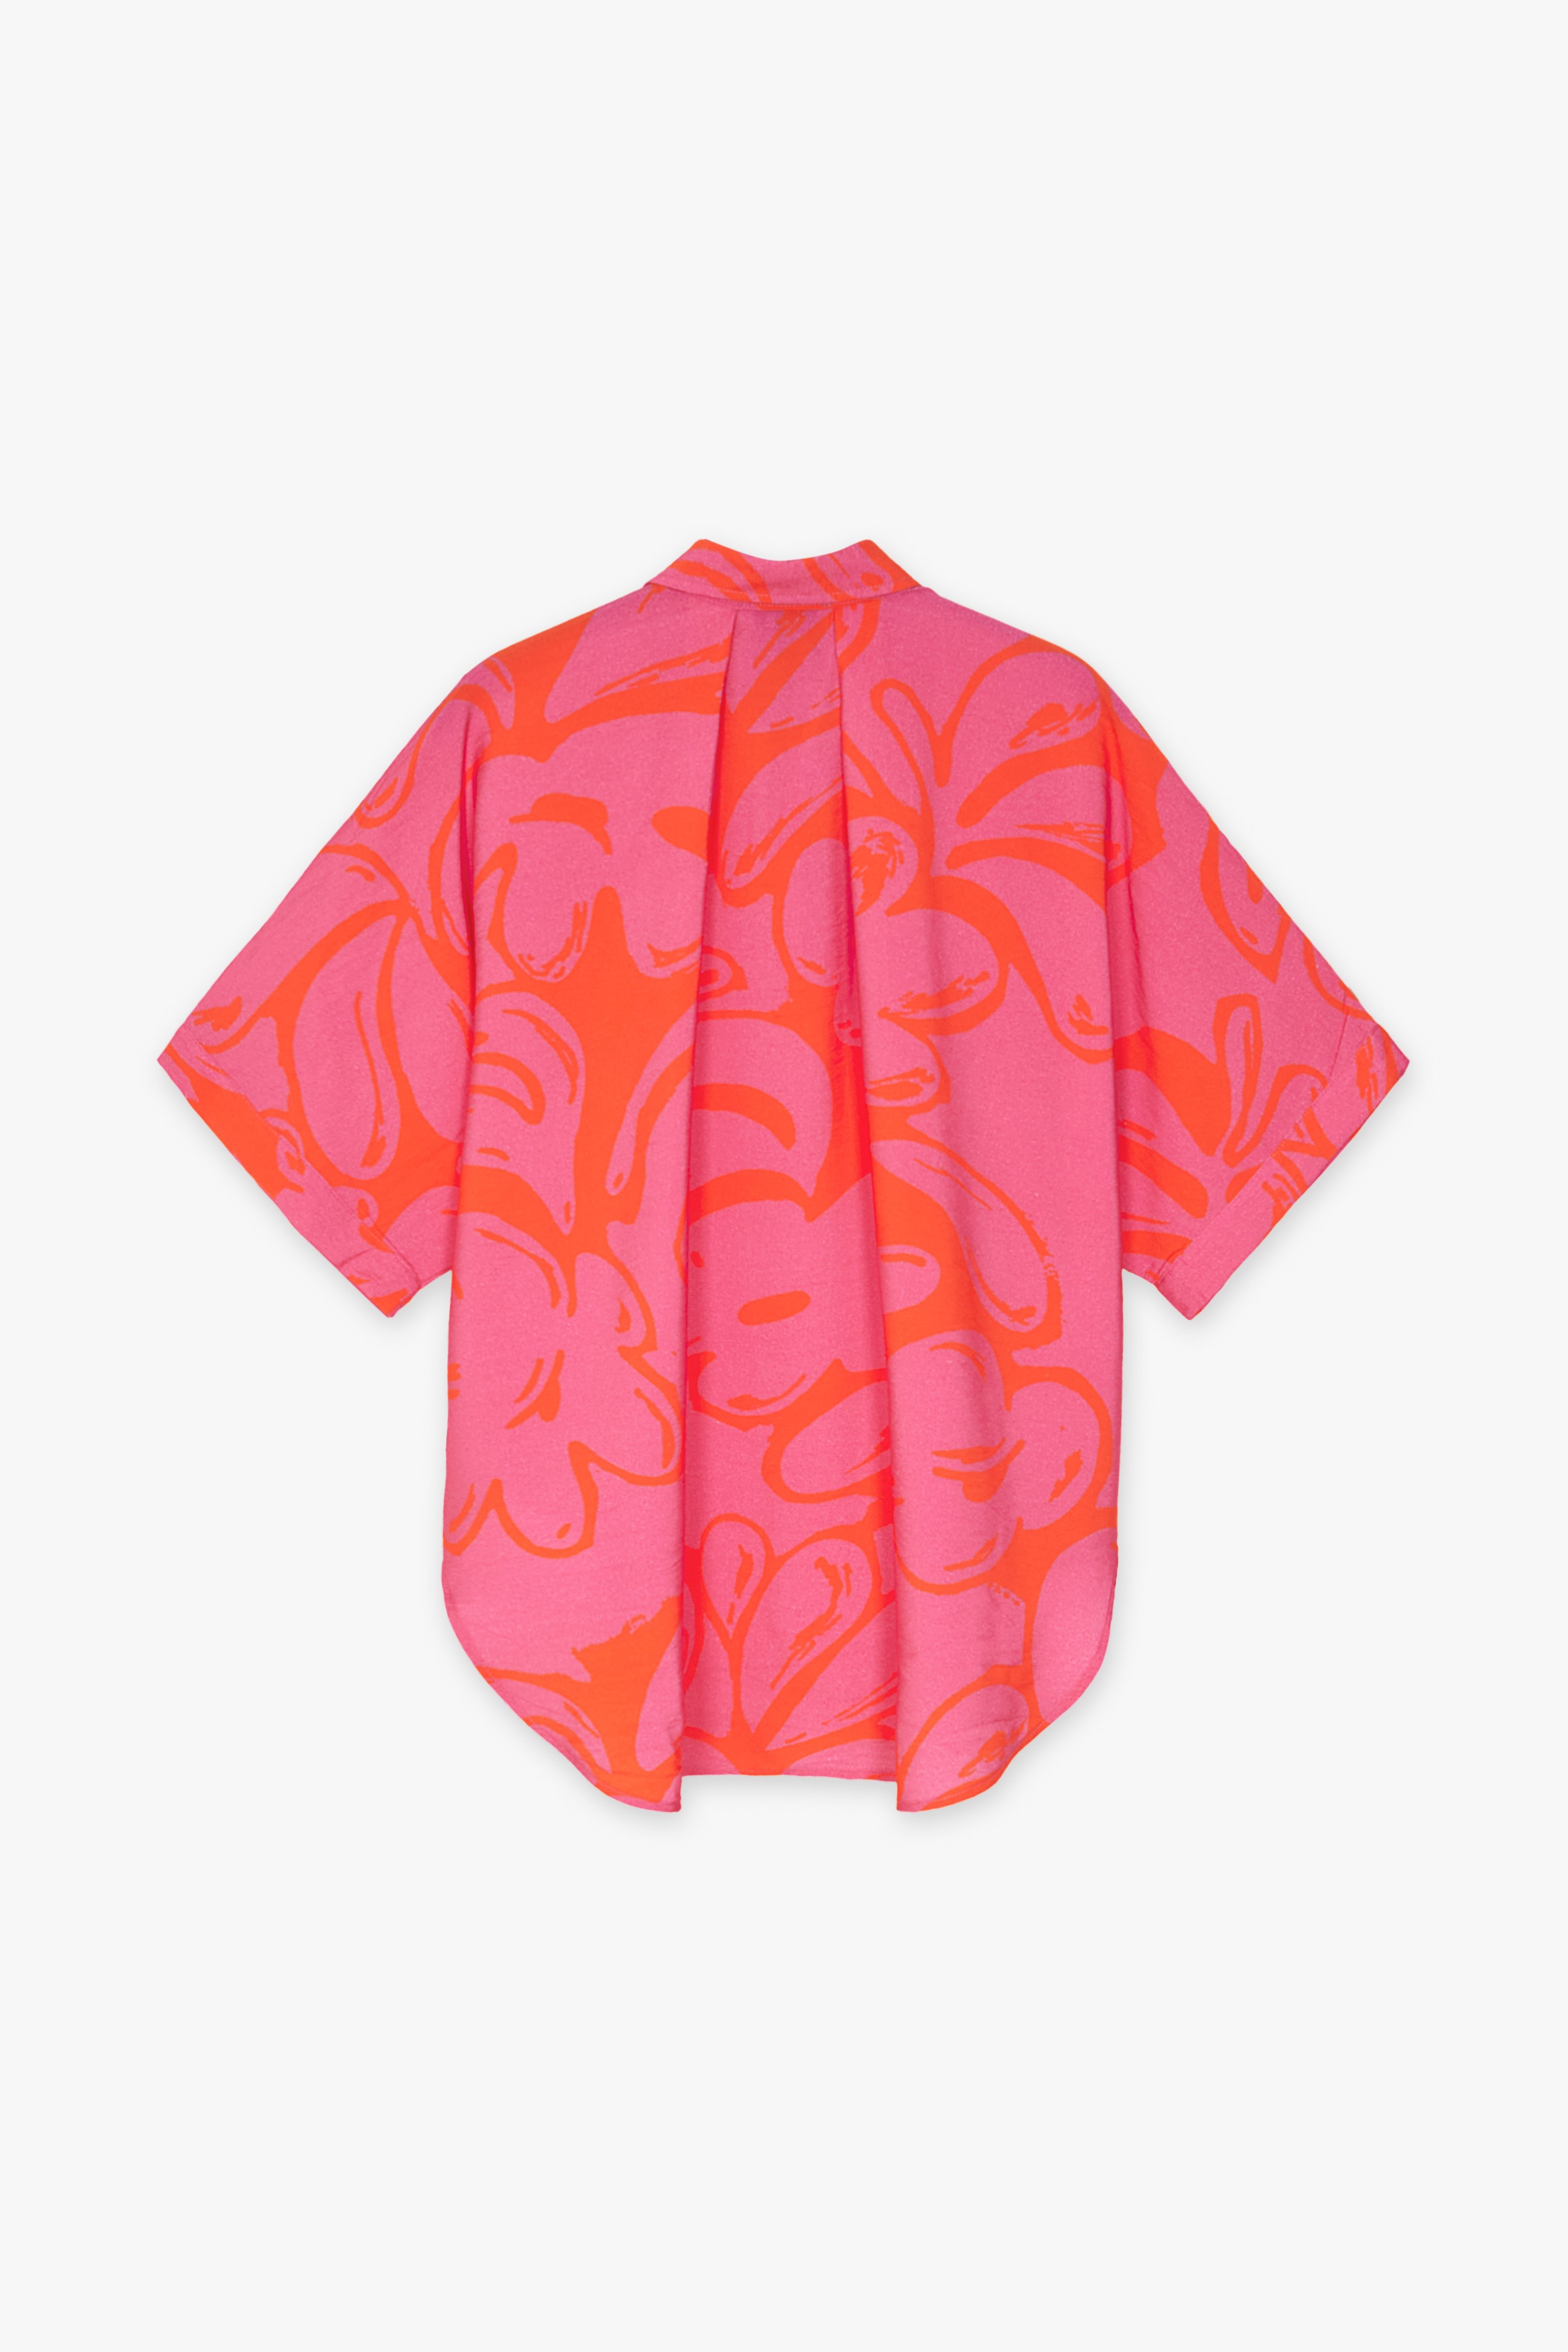 CKS Dames - SELAH - blouse korte mouwen - intens roze